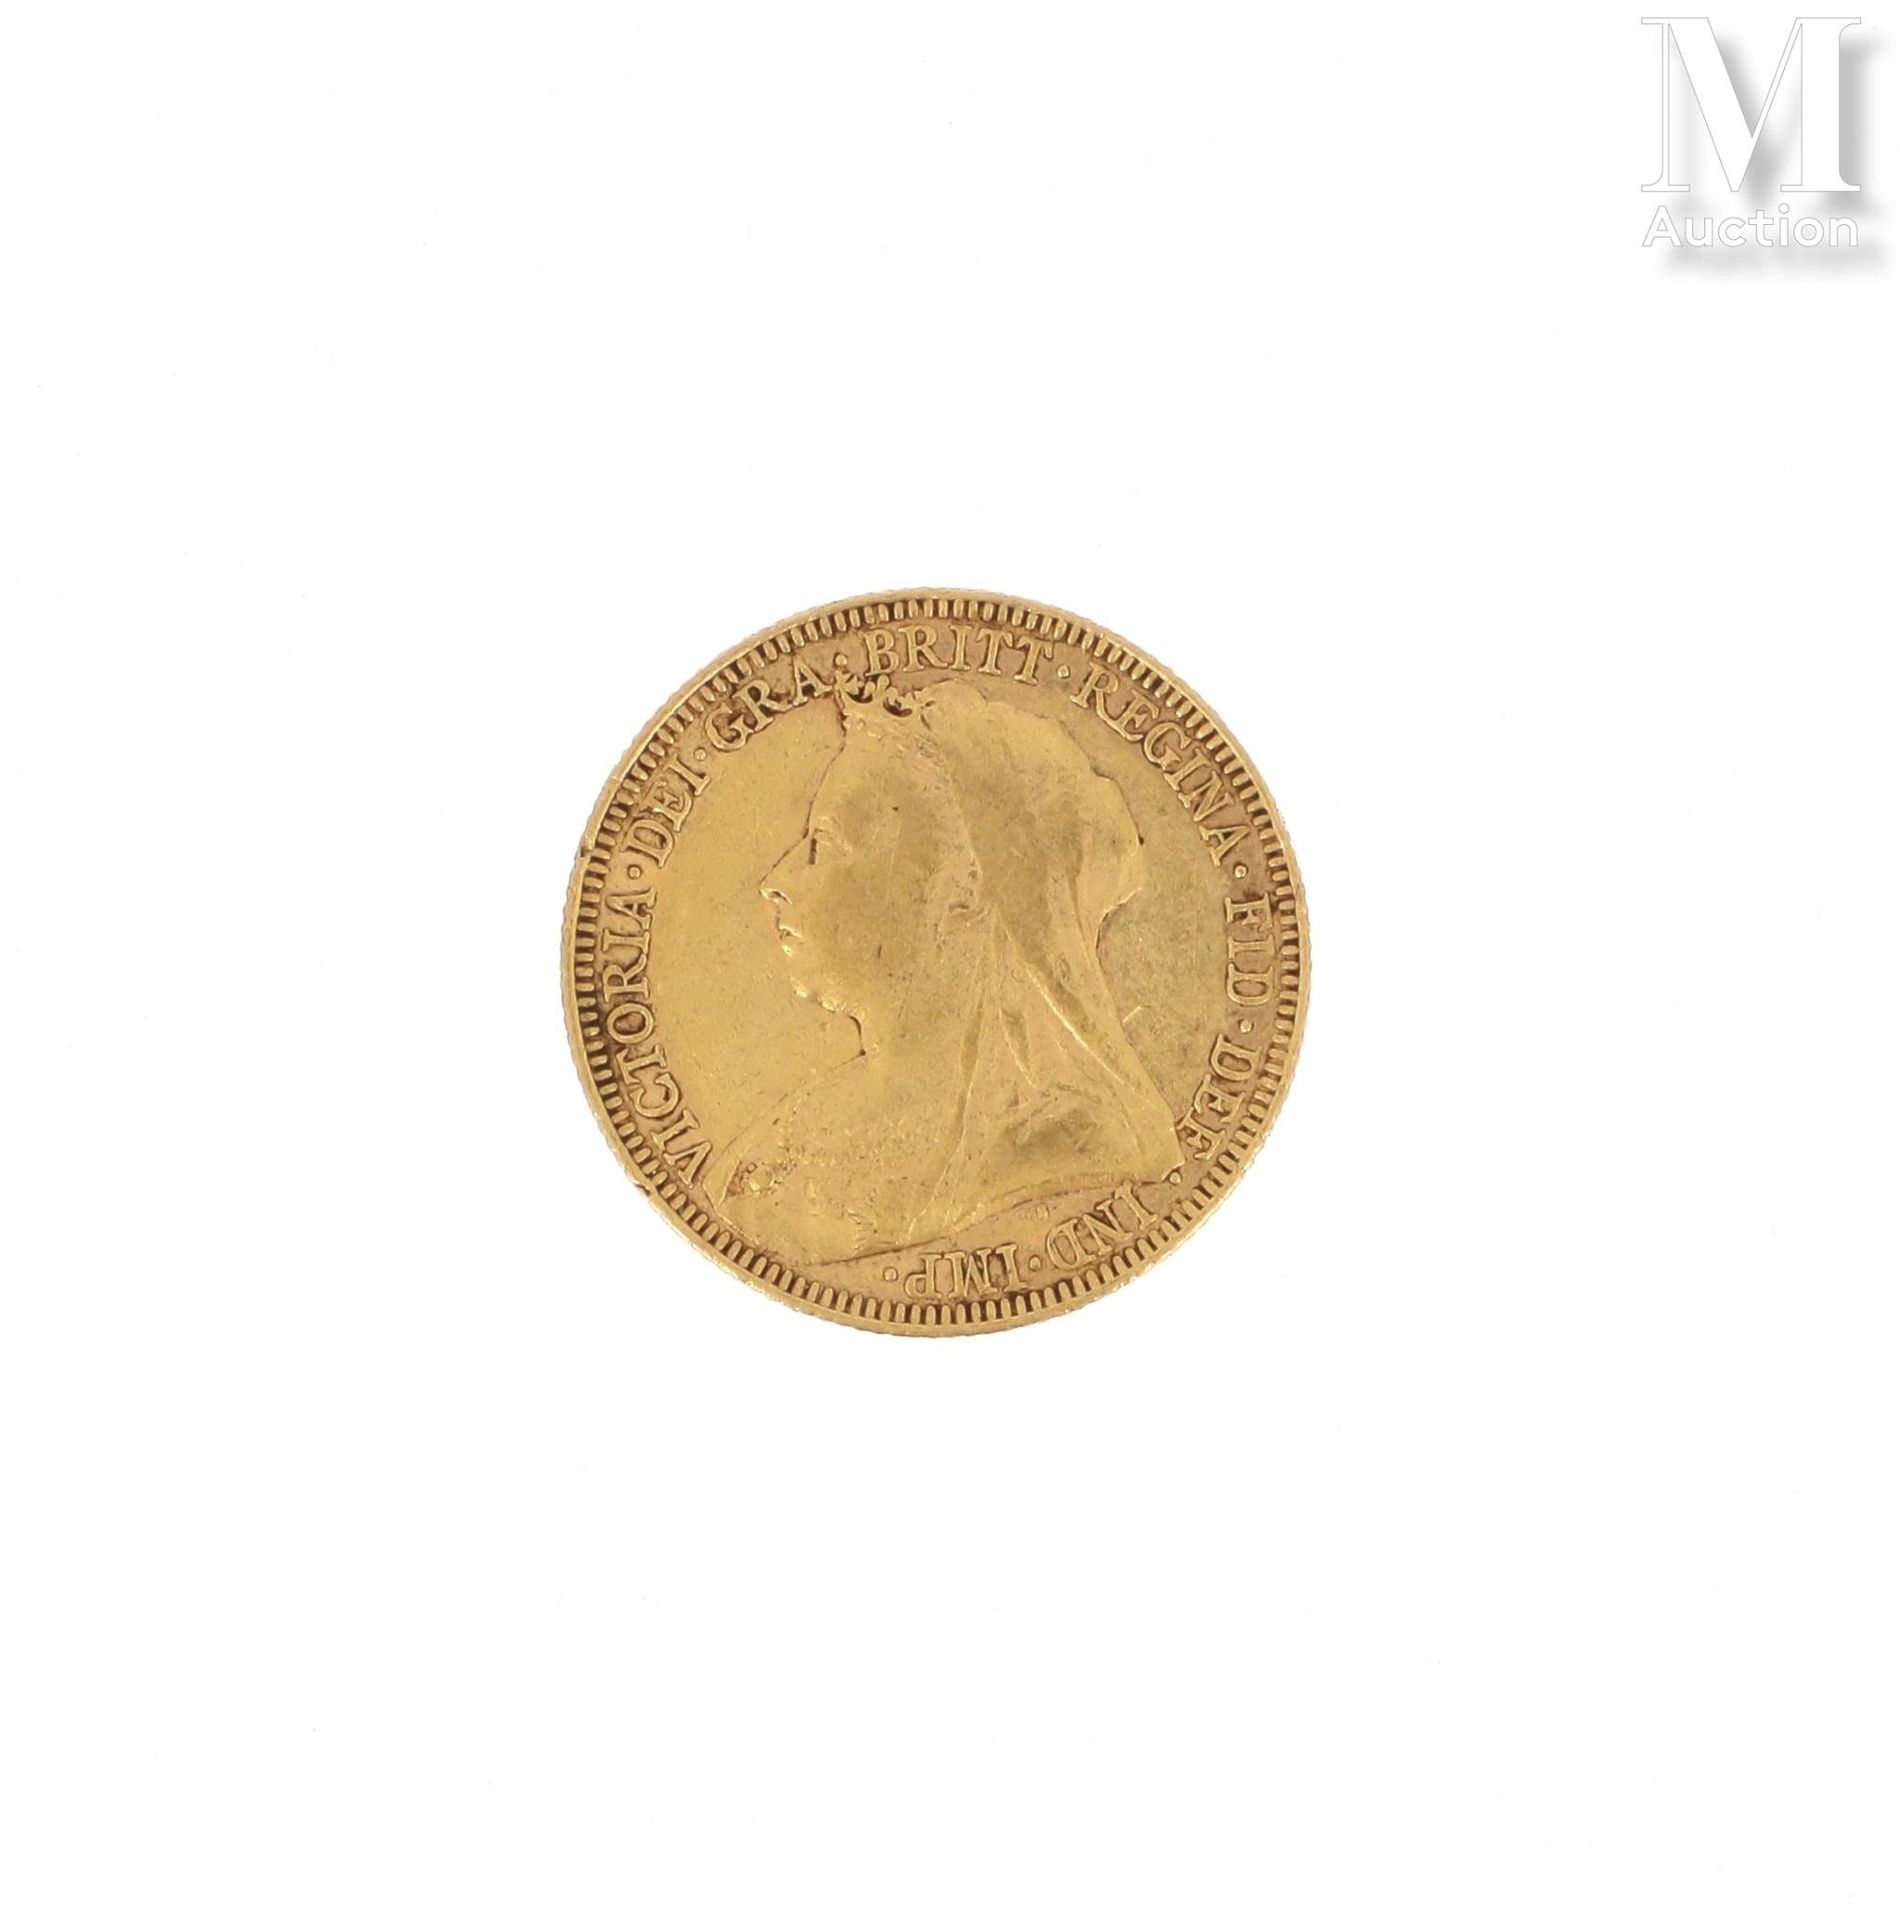 Pièce Souverain or Una moneda de oro del Soberano Victoria vela

1893